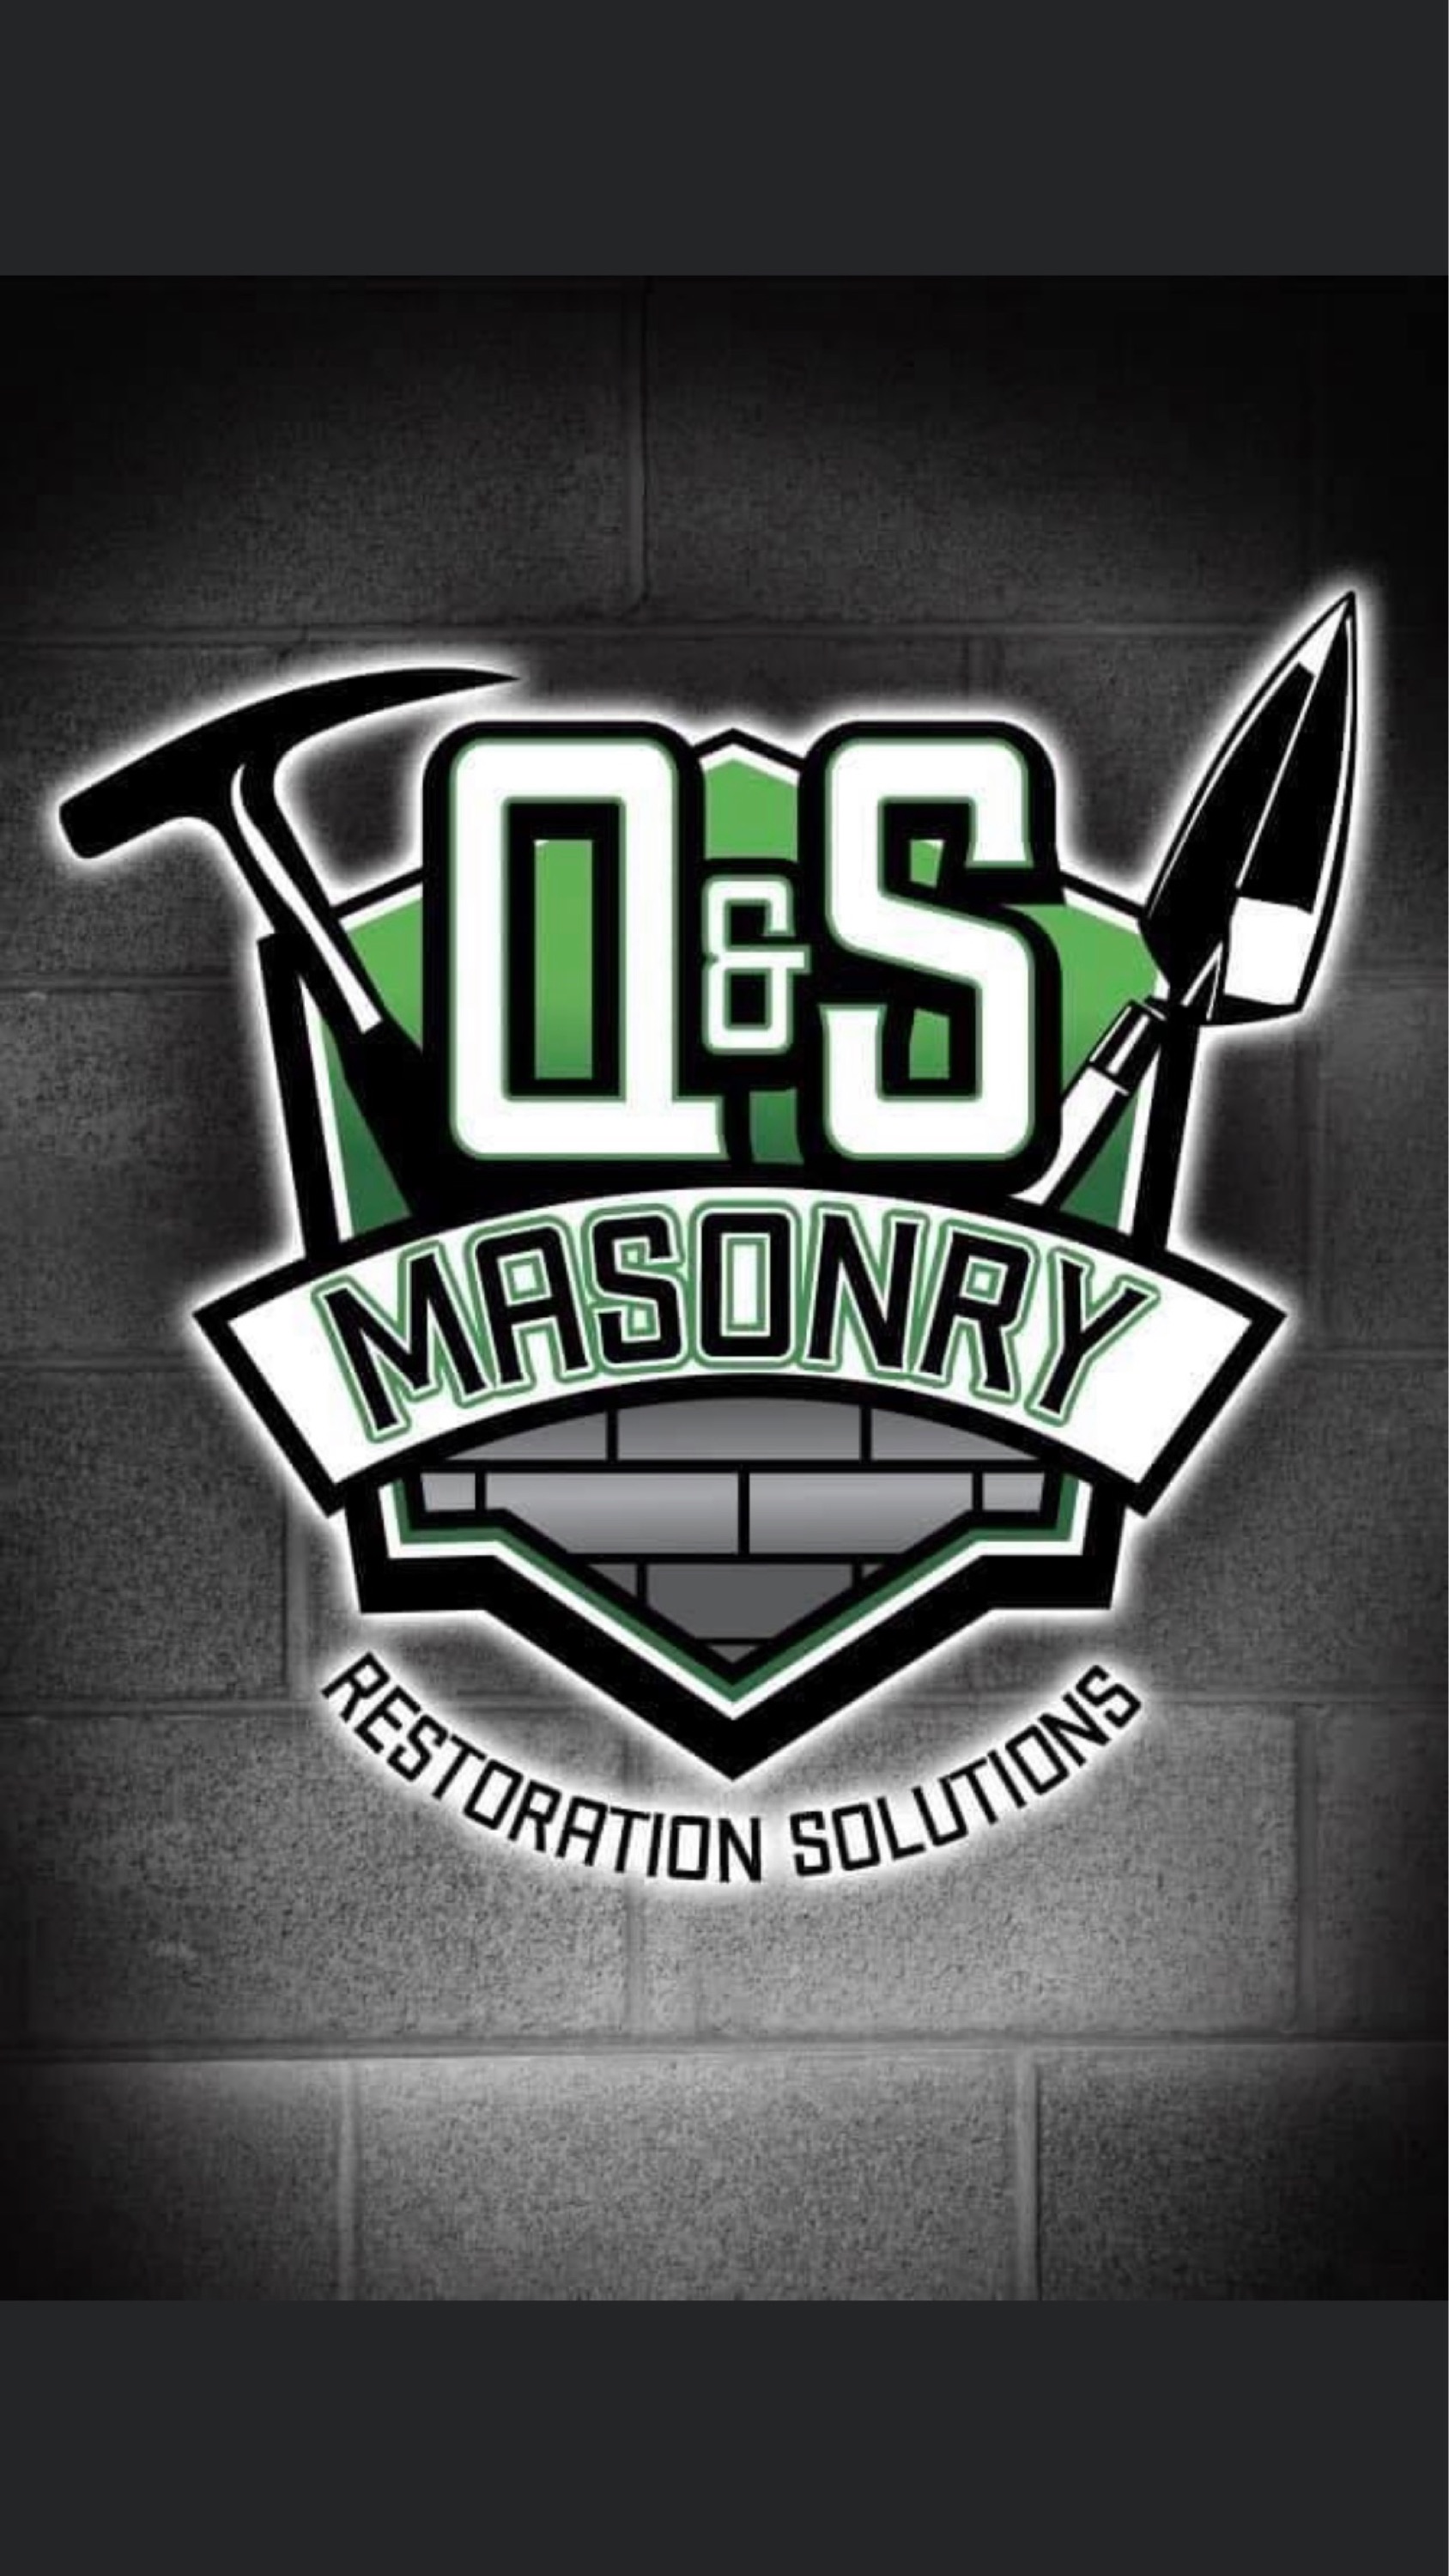 Q&S Masonry Restoration Solutions, LLC Logo